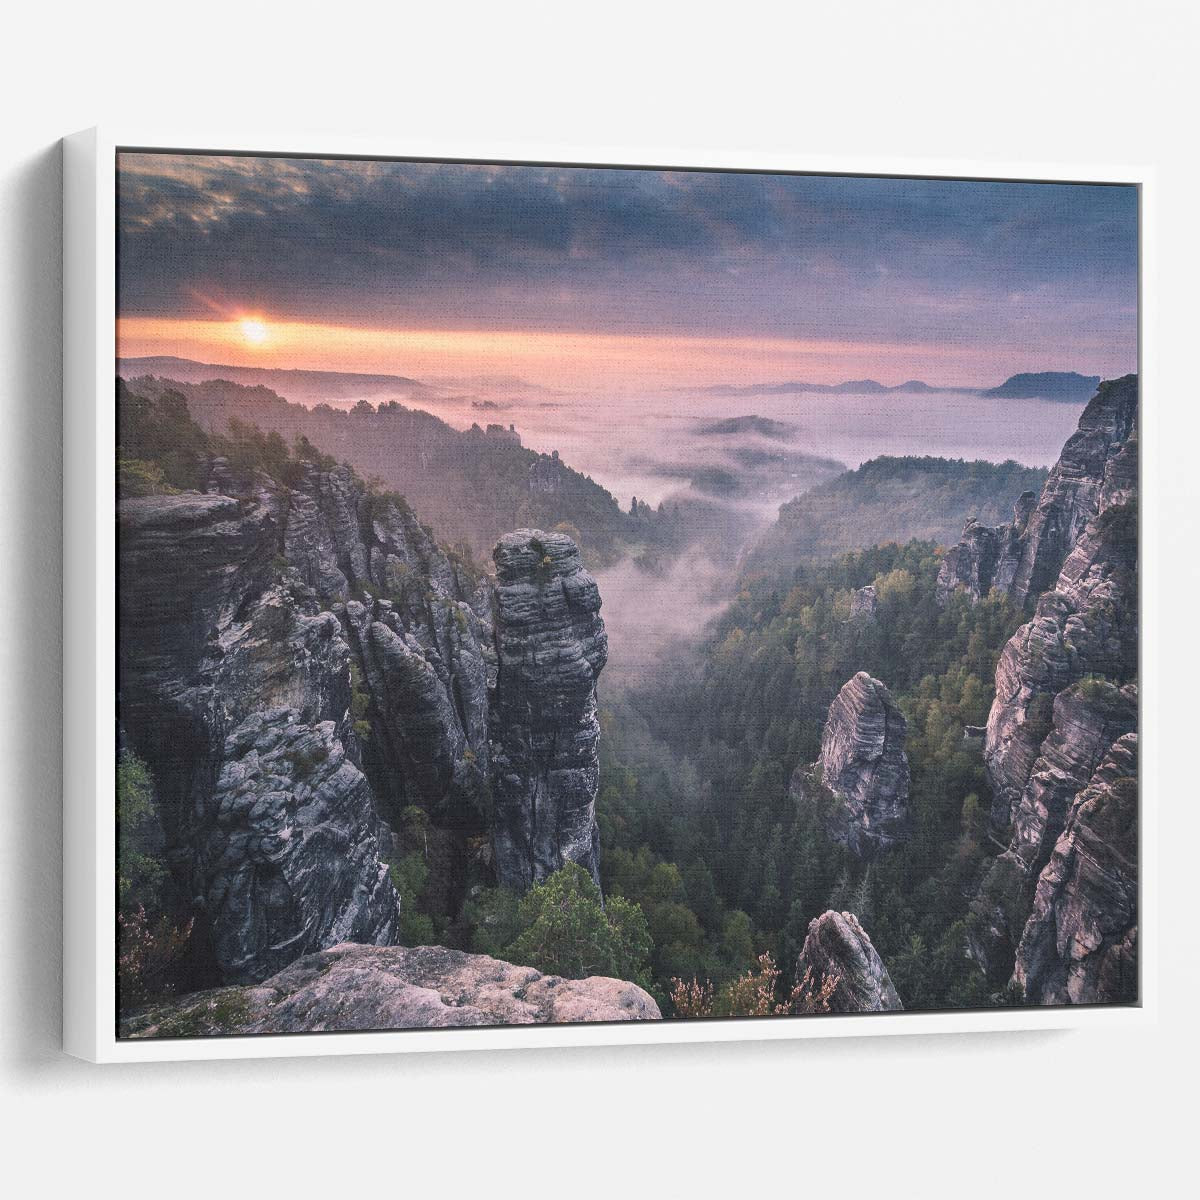 Misty Saxon Switzerland Sunrise Mountain View Wall Art by Luxuriance Designs. Made in USA.